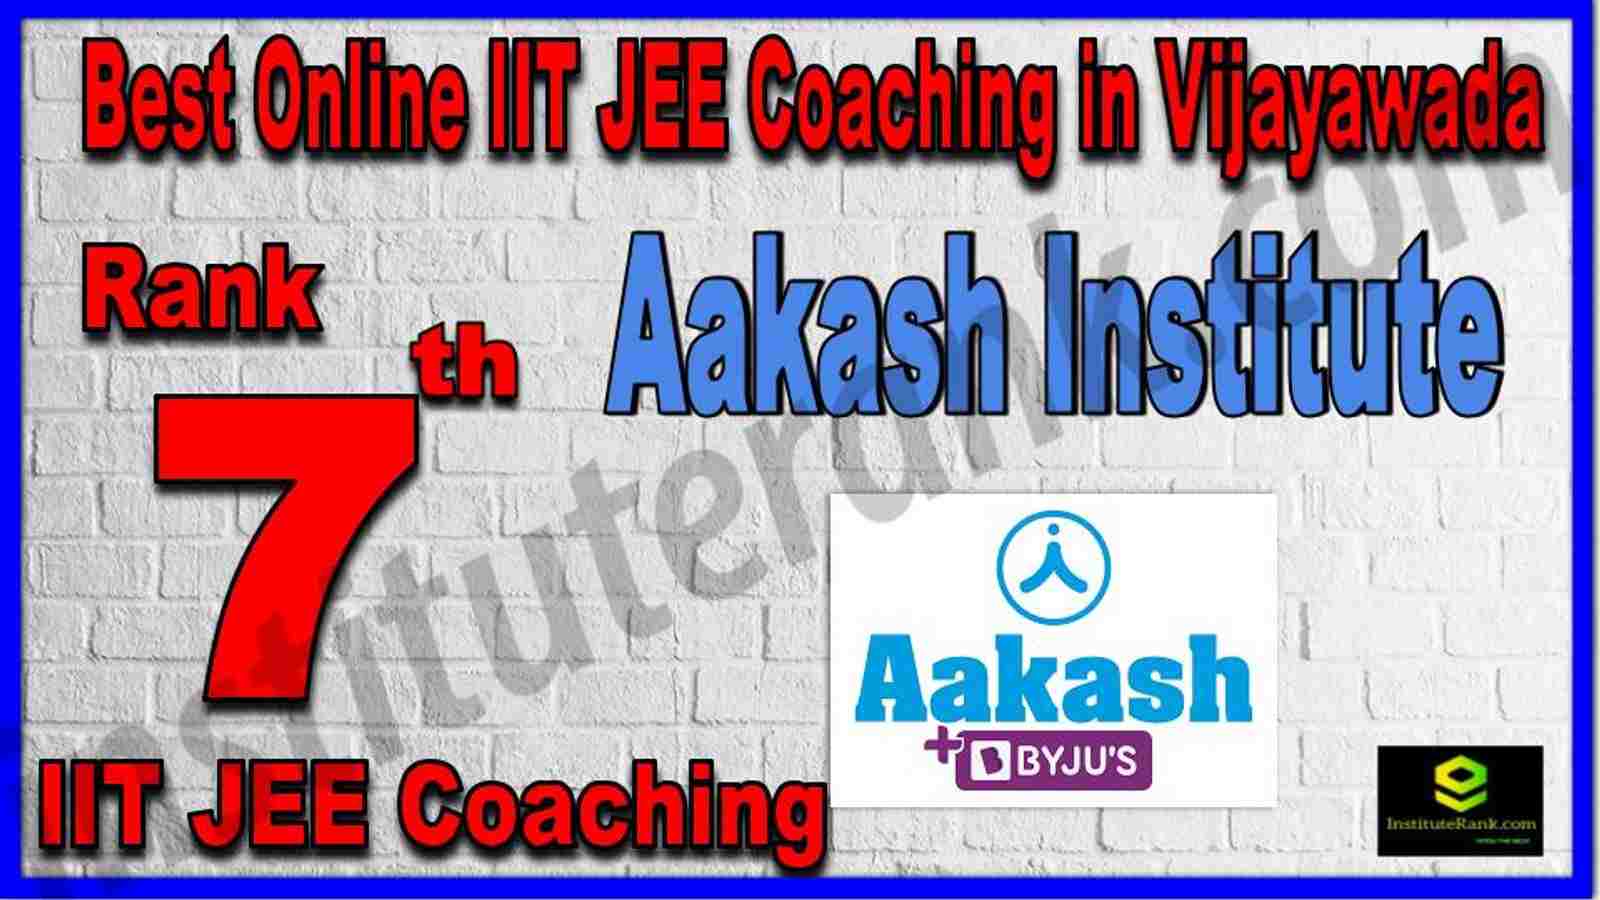 Rank 7th Best Online IIT JEE Coaching in Vijayawada